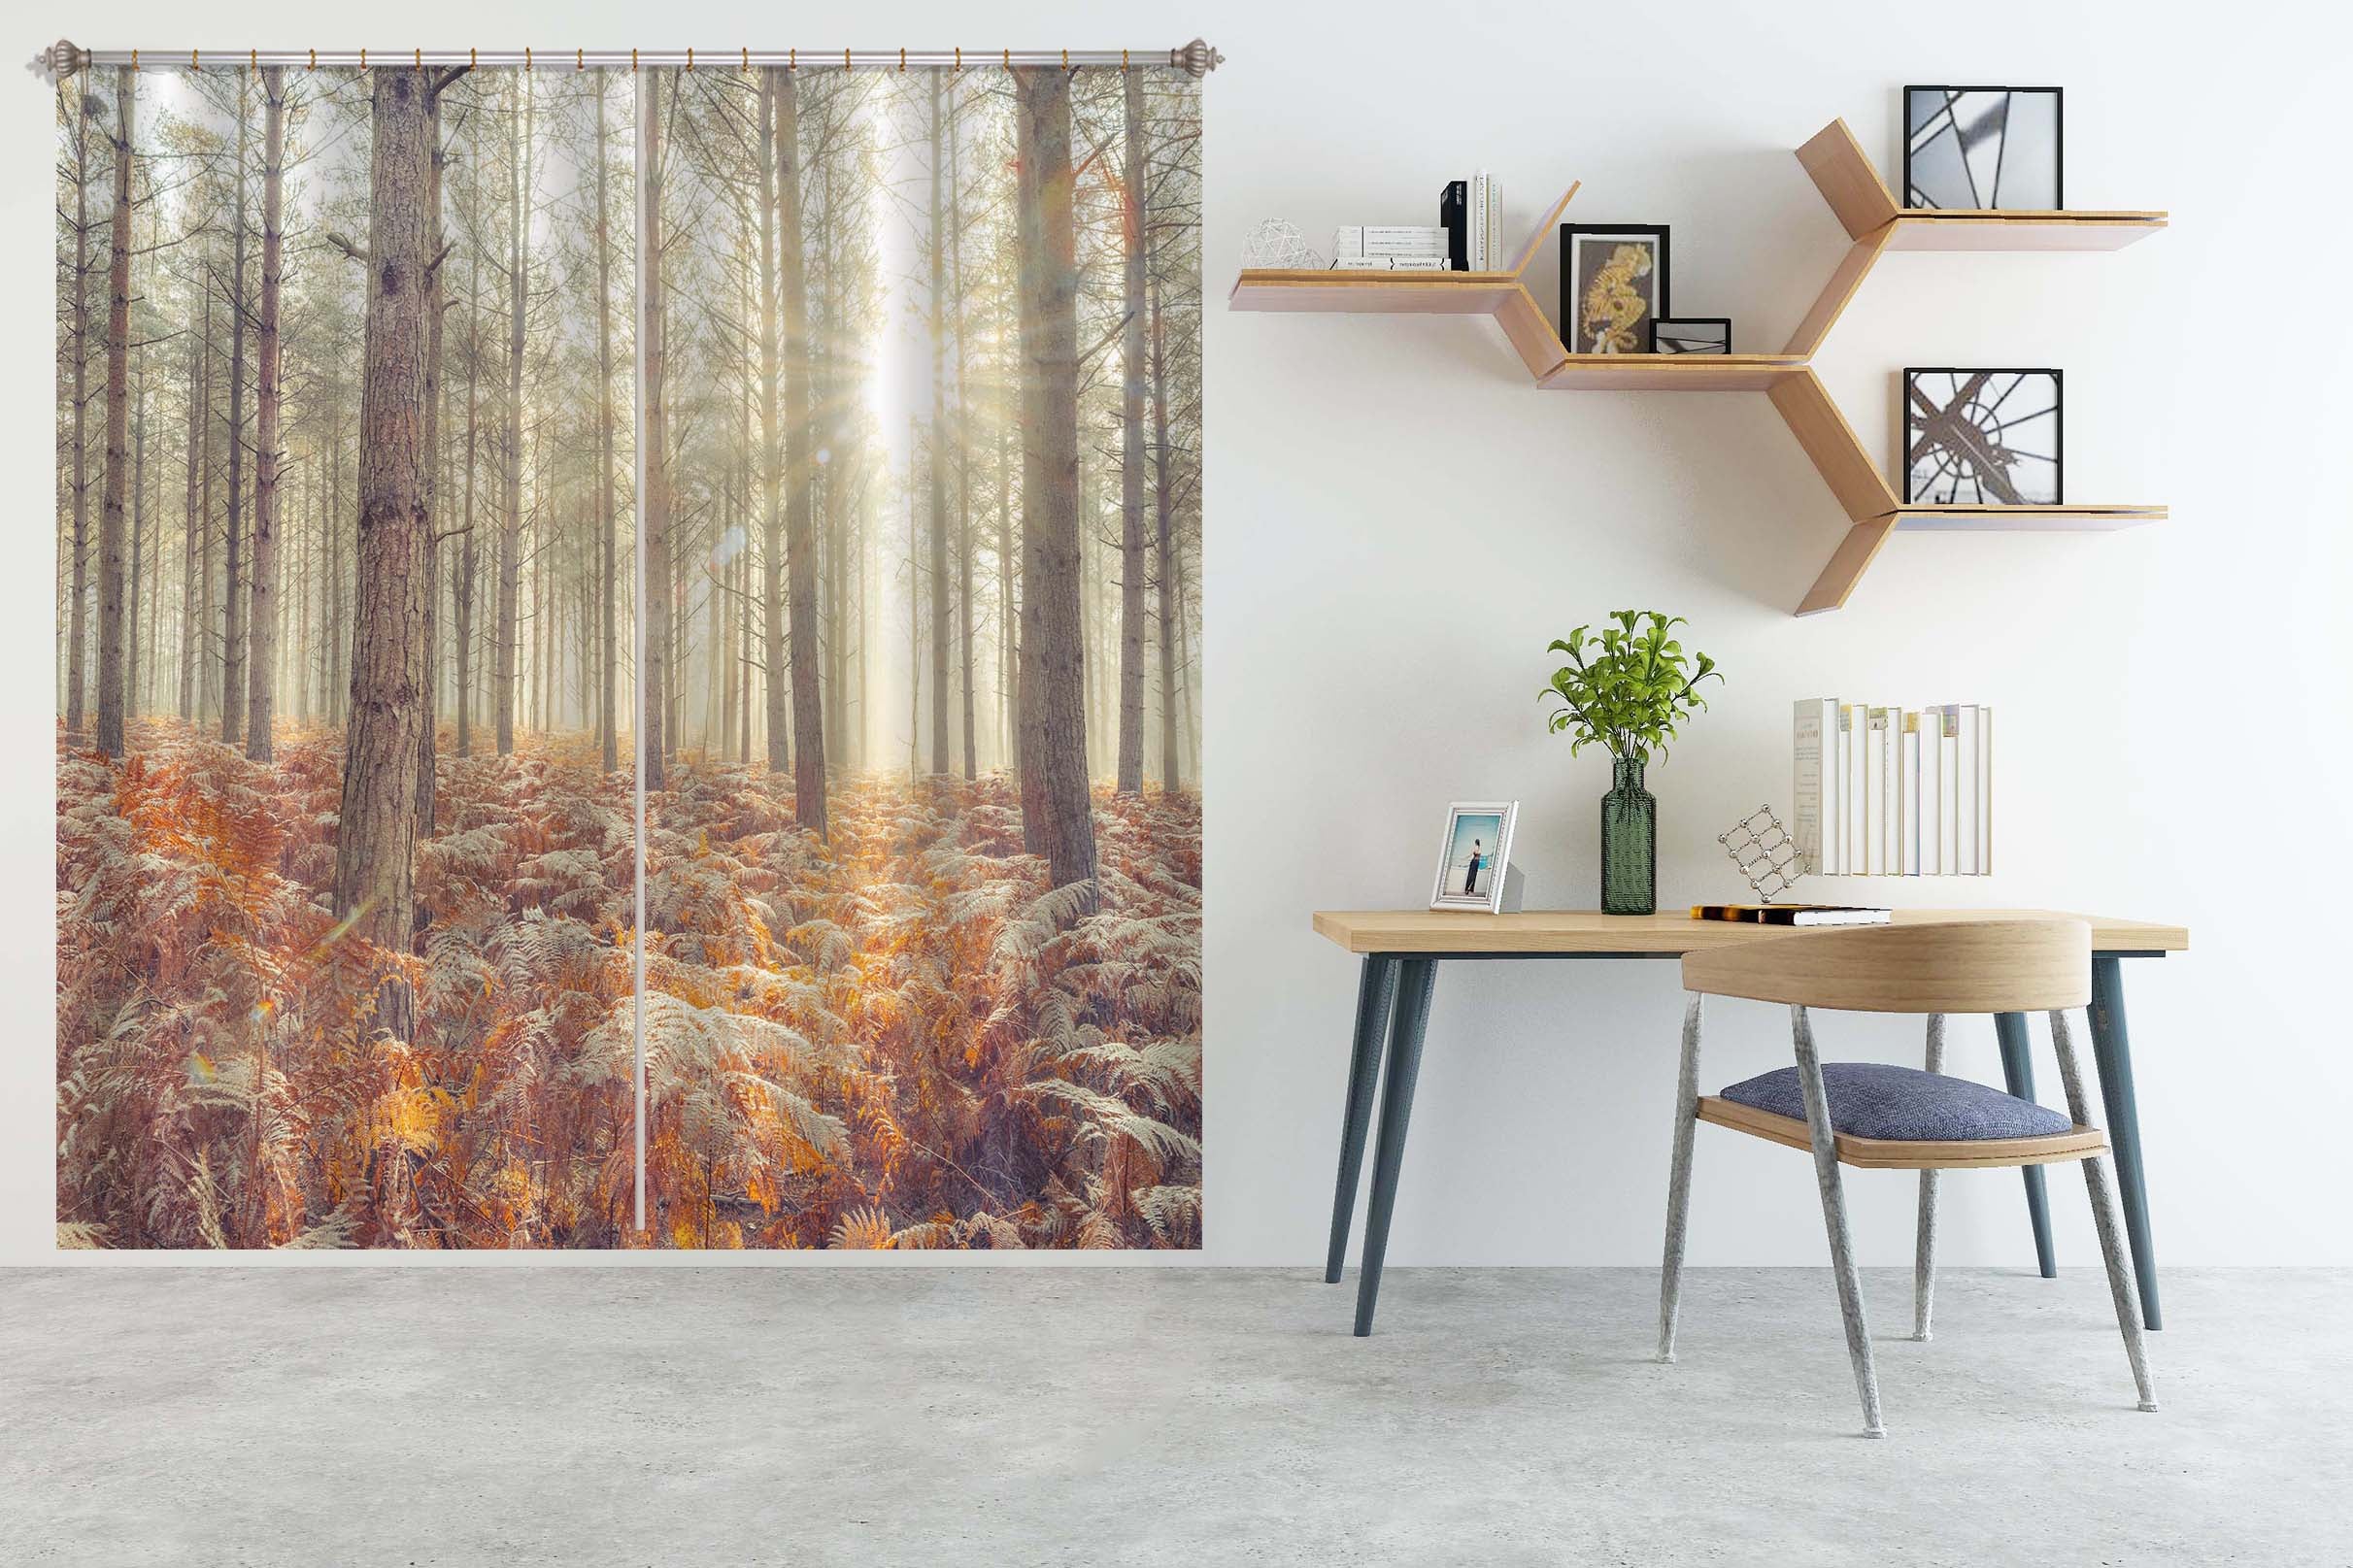 3D Leaves Trees 6360 Assaf Frank Curtain Curtains Drapes